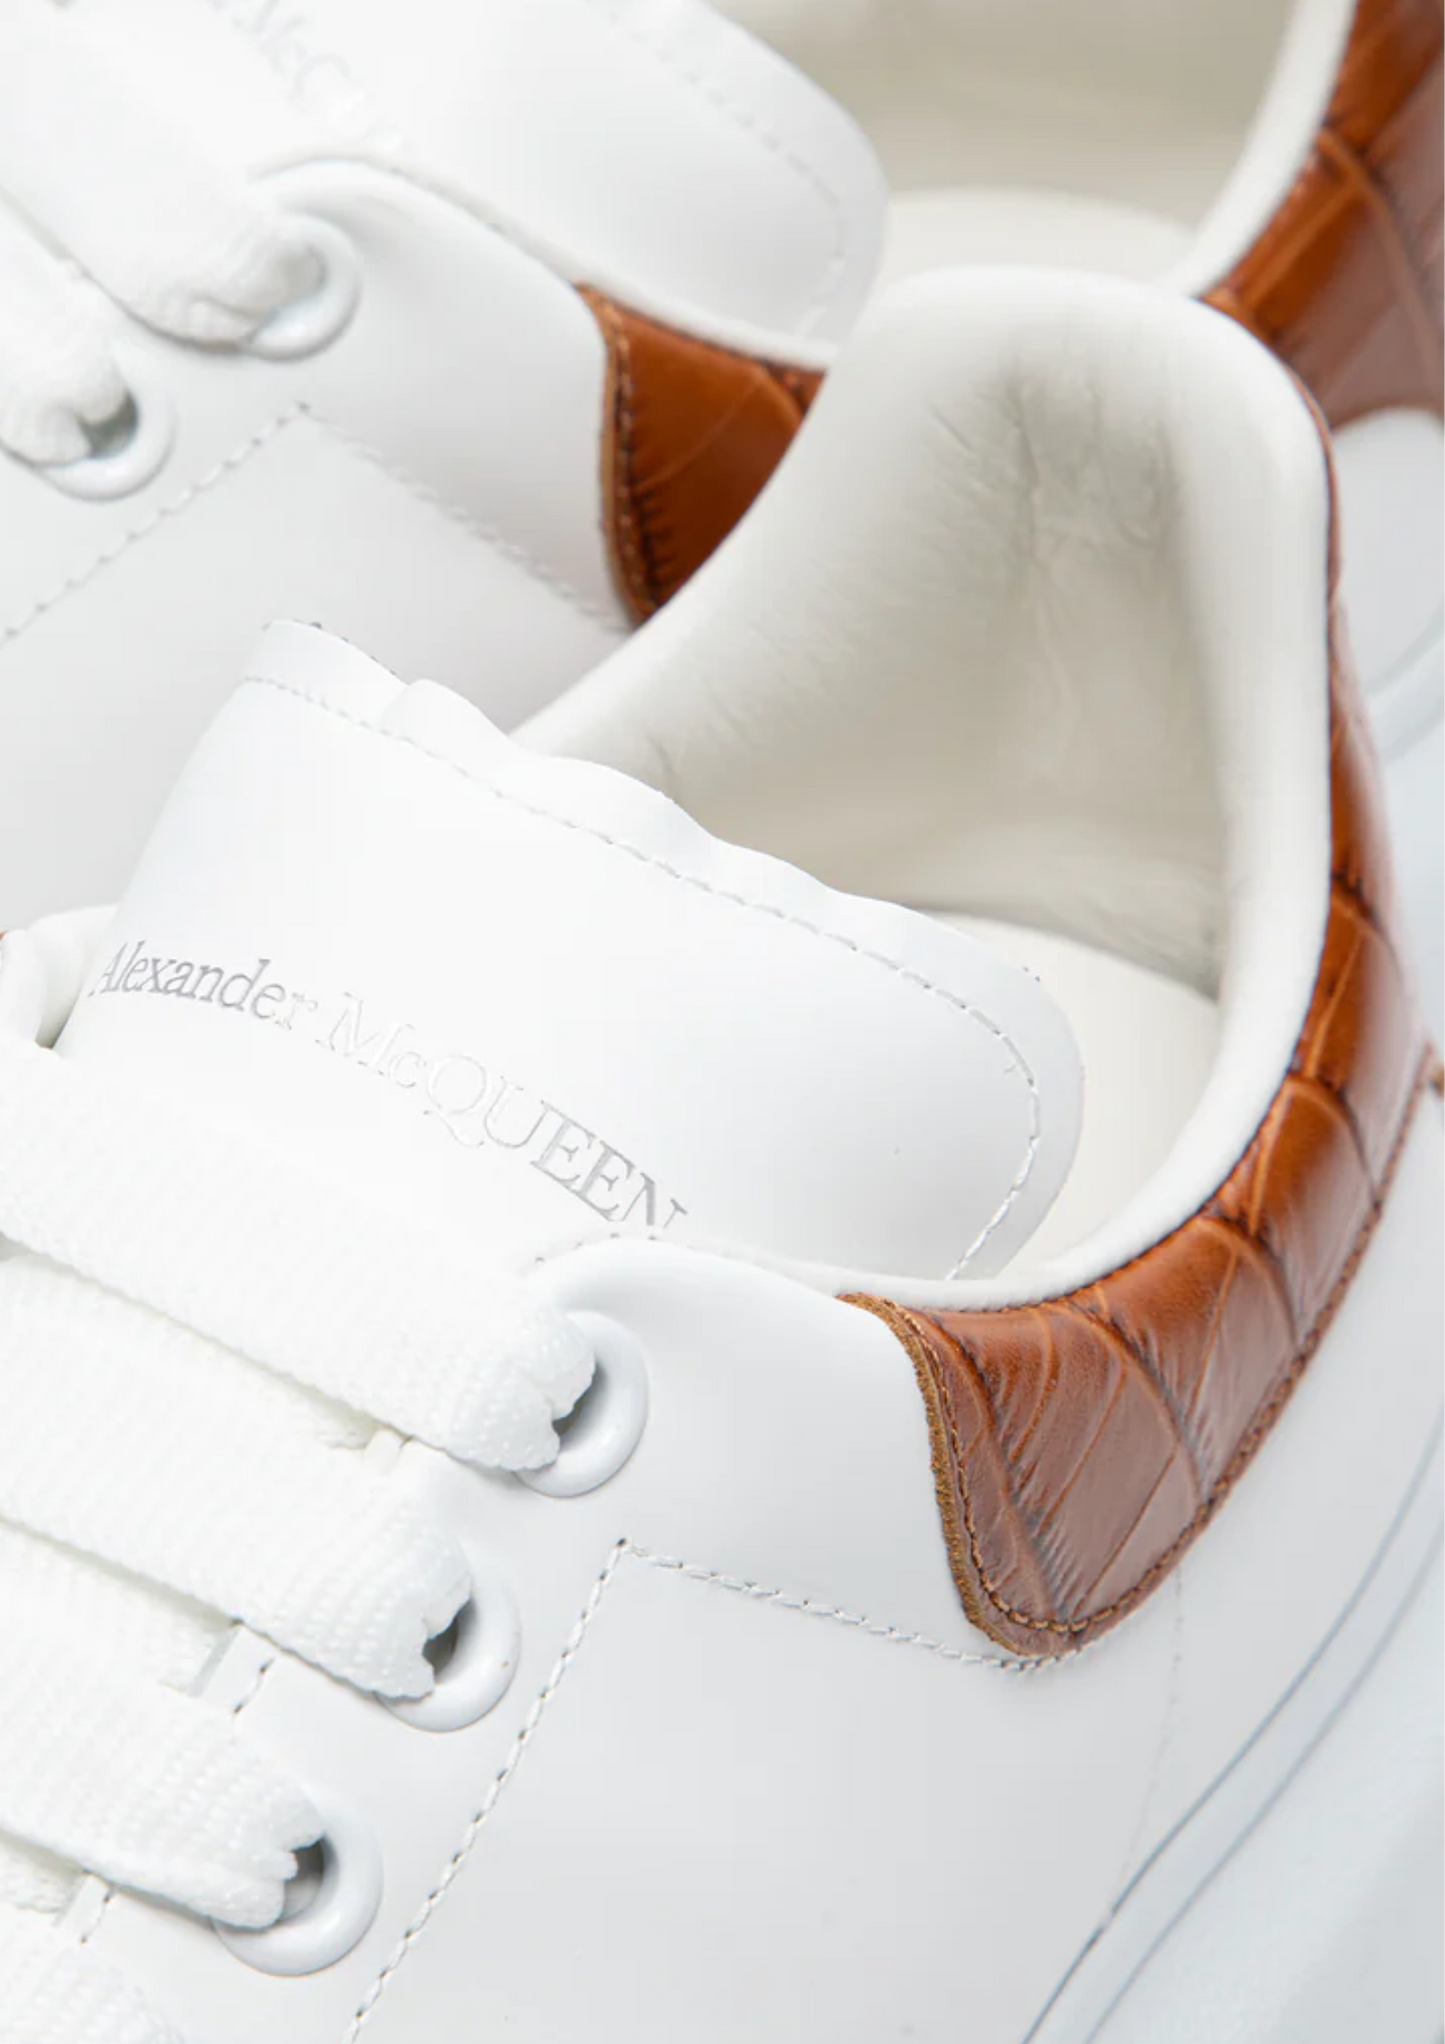 Alexander McQueen Oversized Sneaker ( White Cedar )